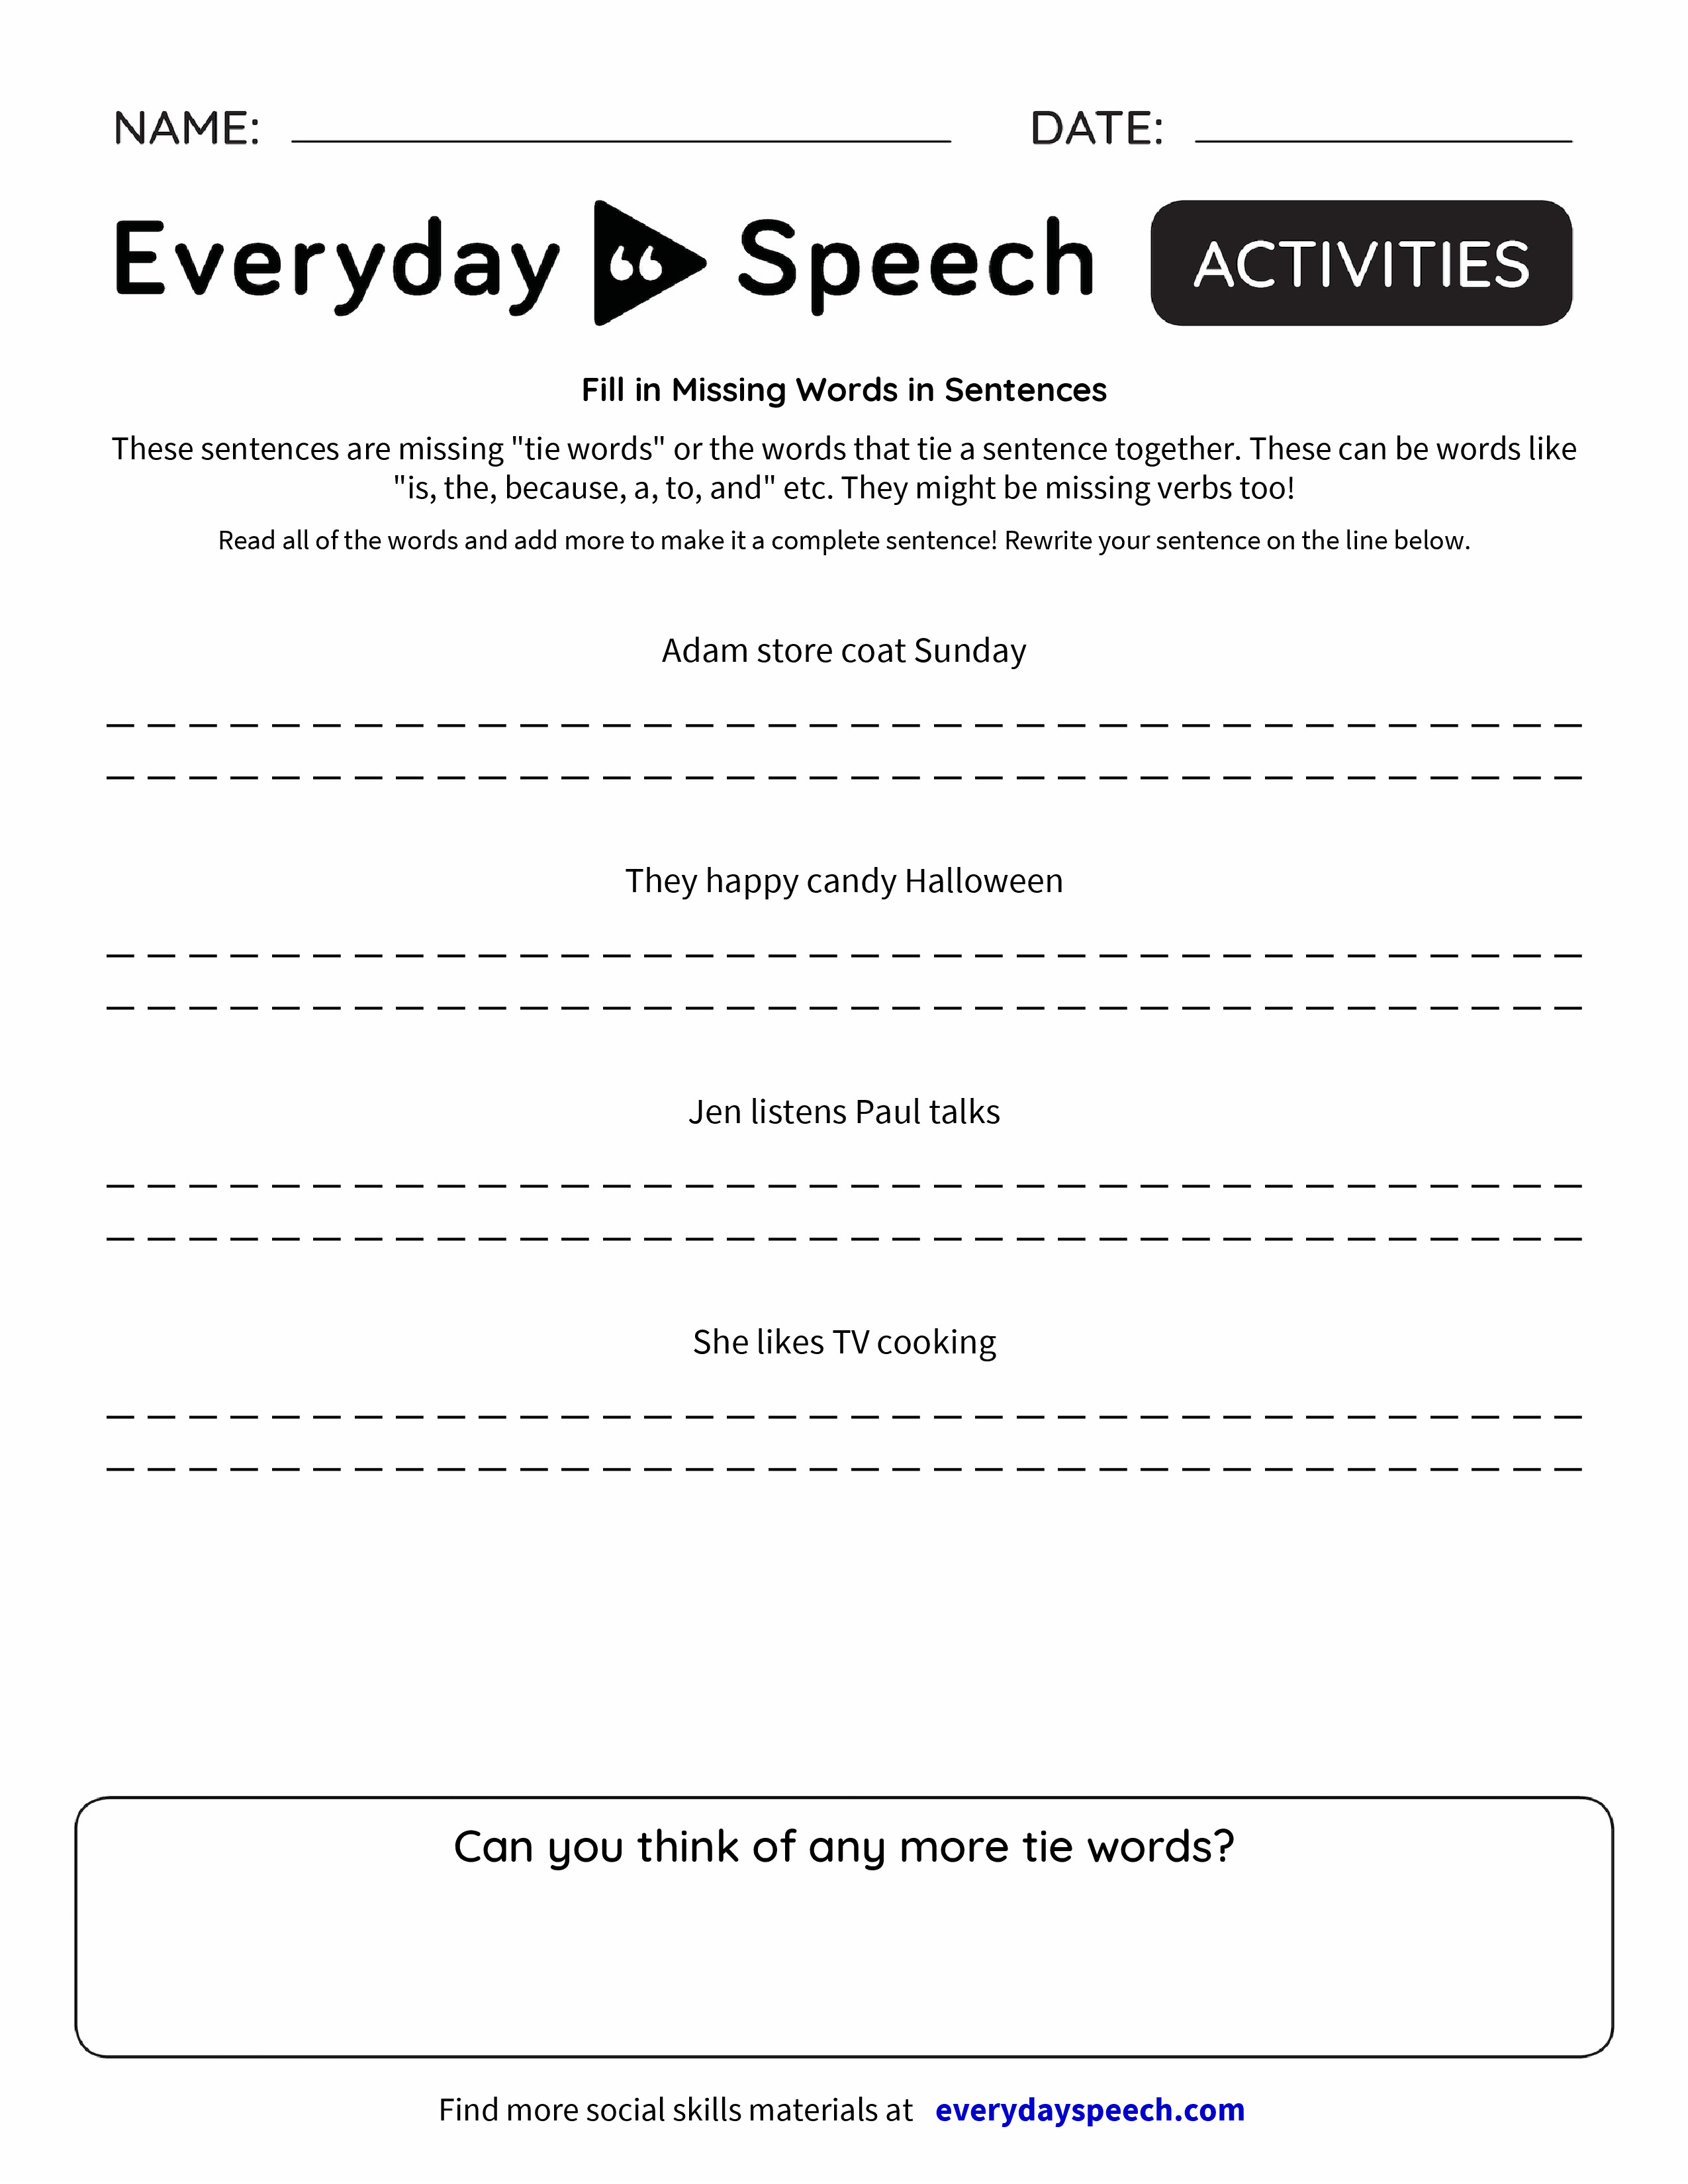 fill-in-missing-words-in-sentences-everyday-speech-everyday-speech